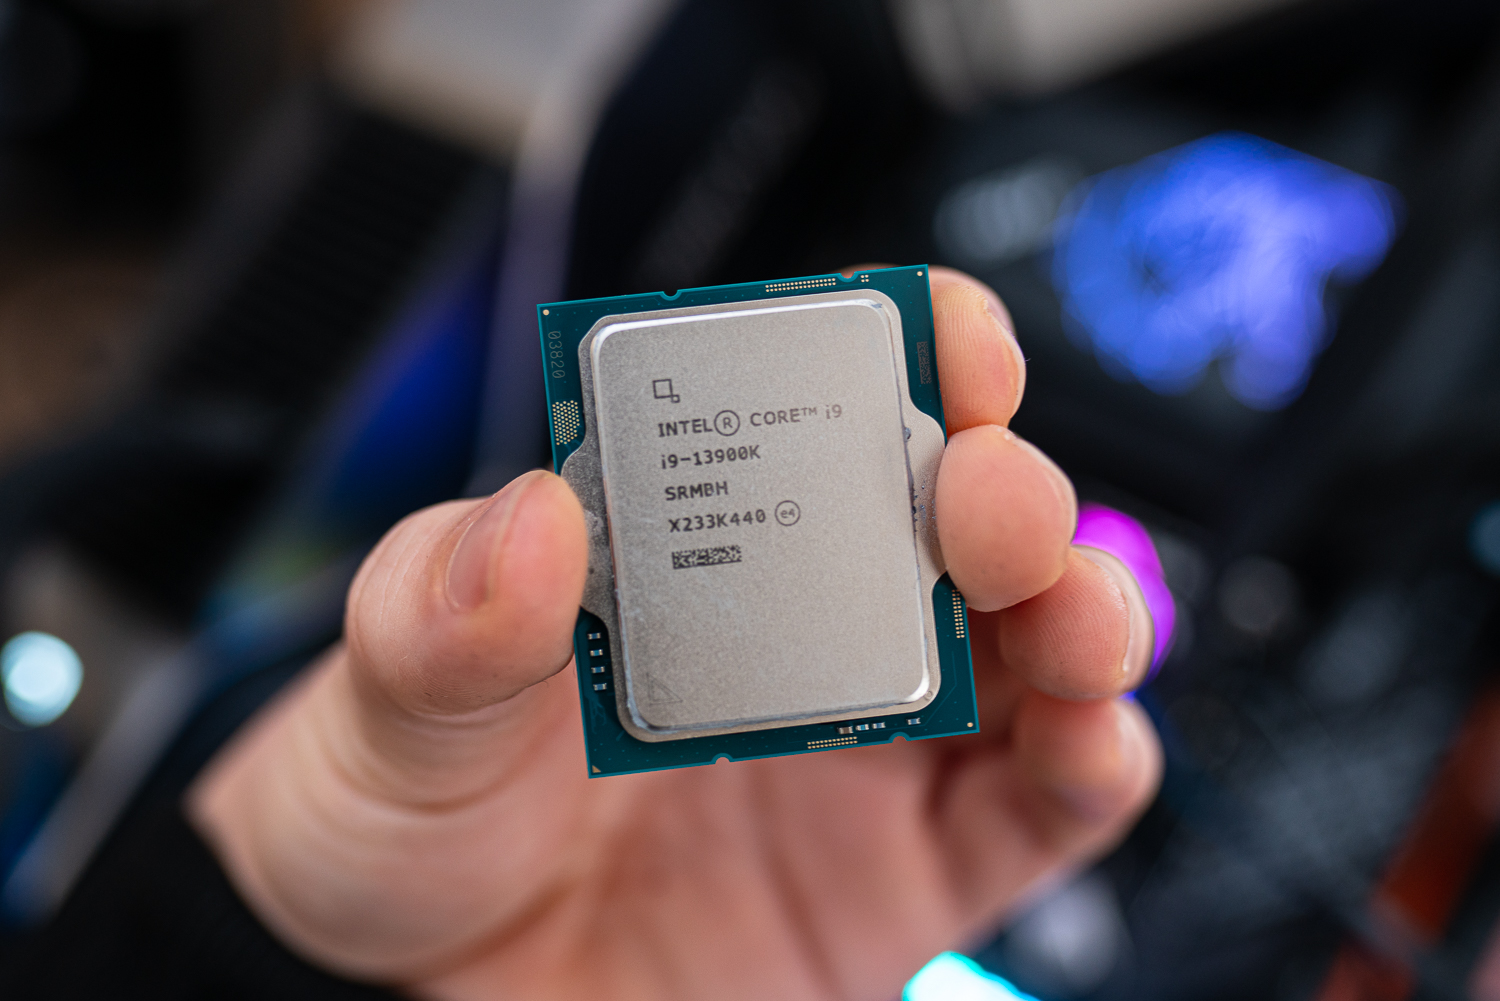 AMD Ryzen 9 7950X vs. Intel Core i9-13900K: a close battle